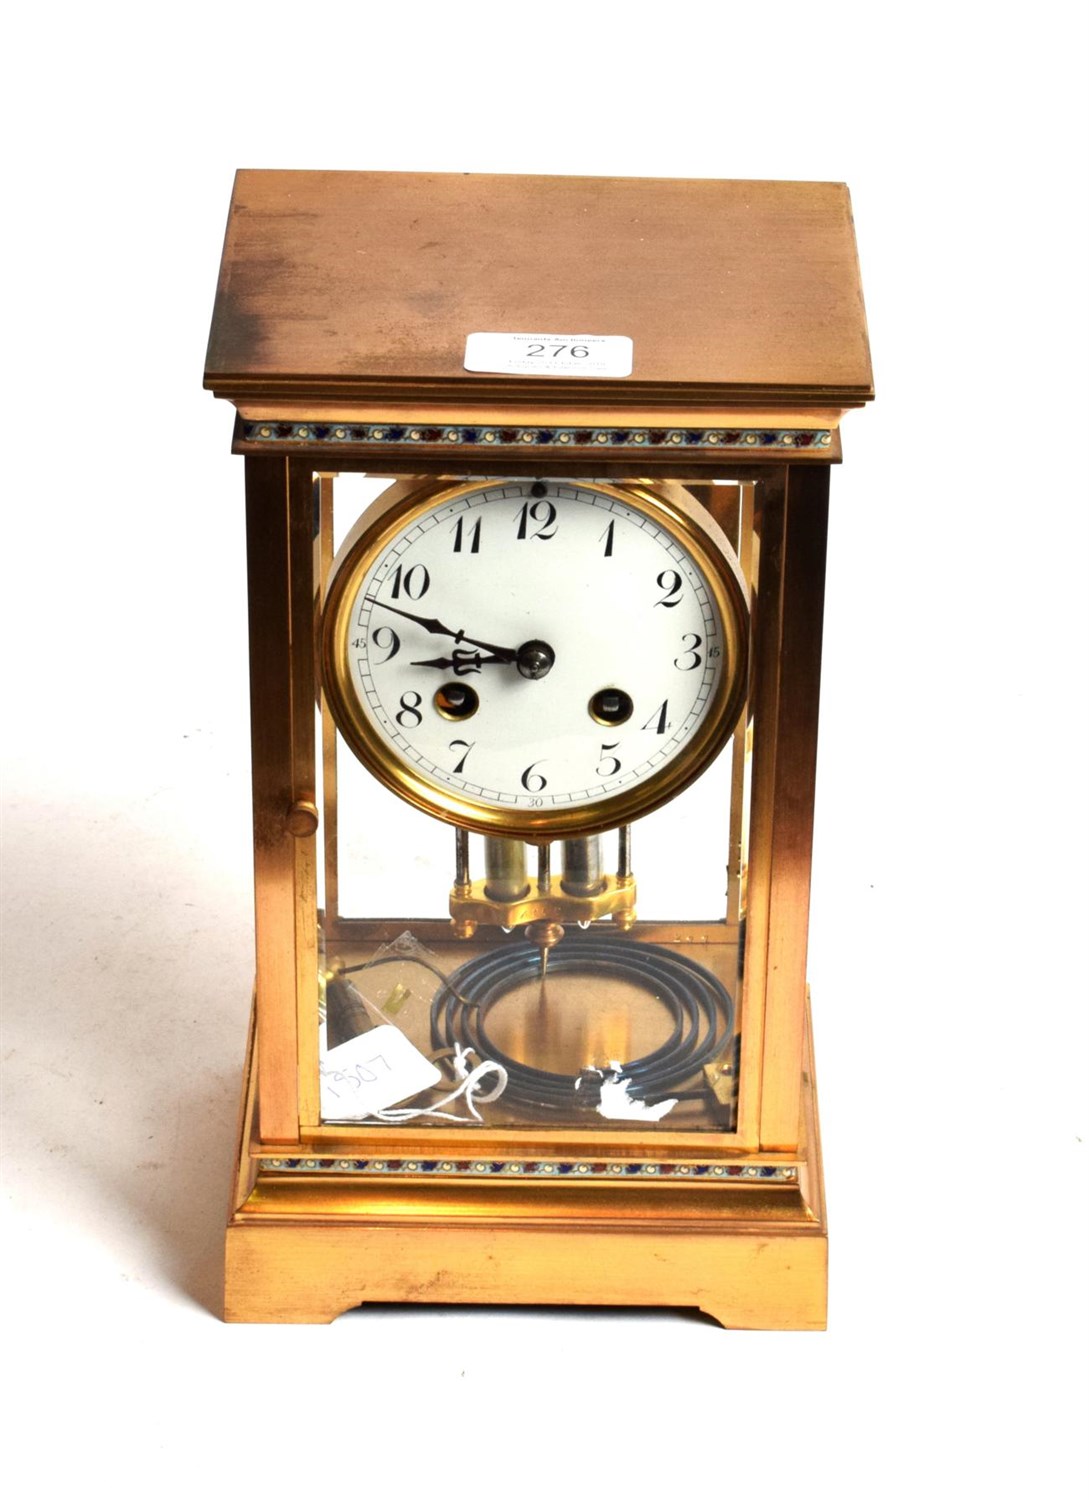 Lot 276 - A brass and champleve enamel four glass striking mantel clock, circa 1900, champleve enamel...